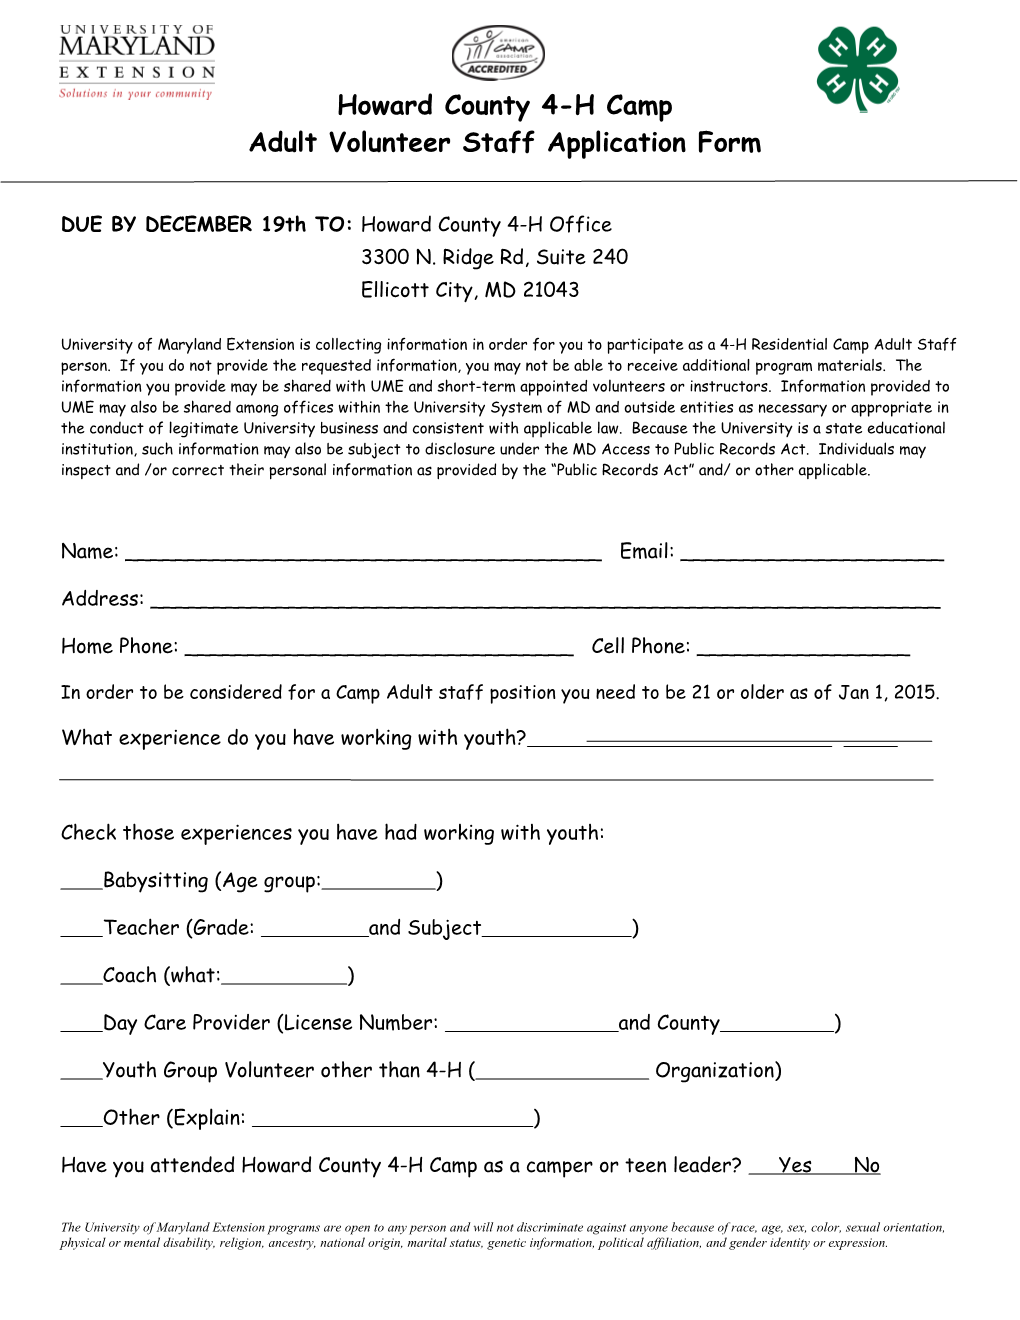 Adult Volunteer Staff Application Form